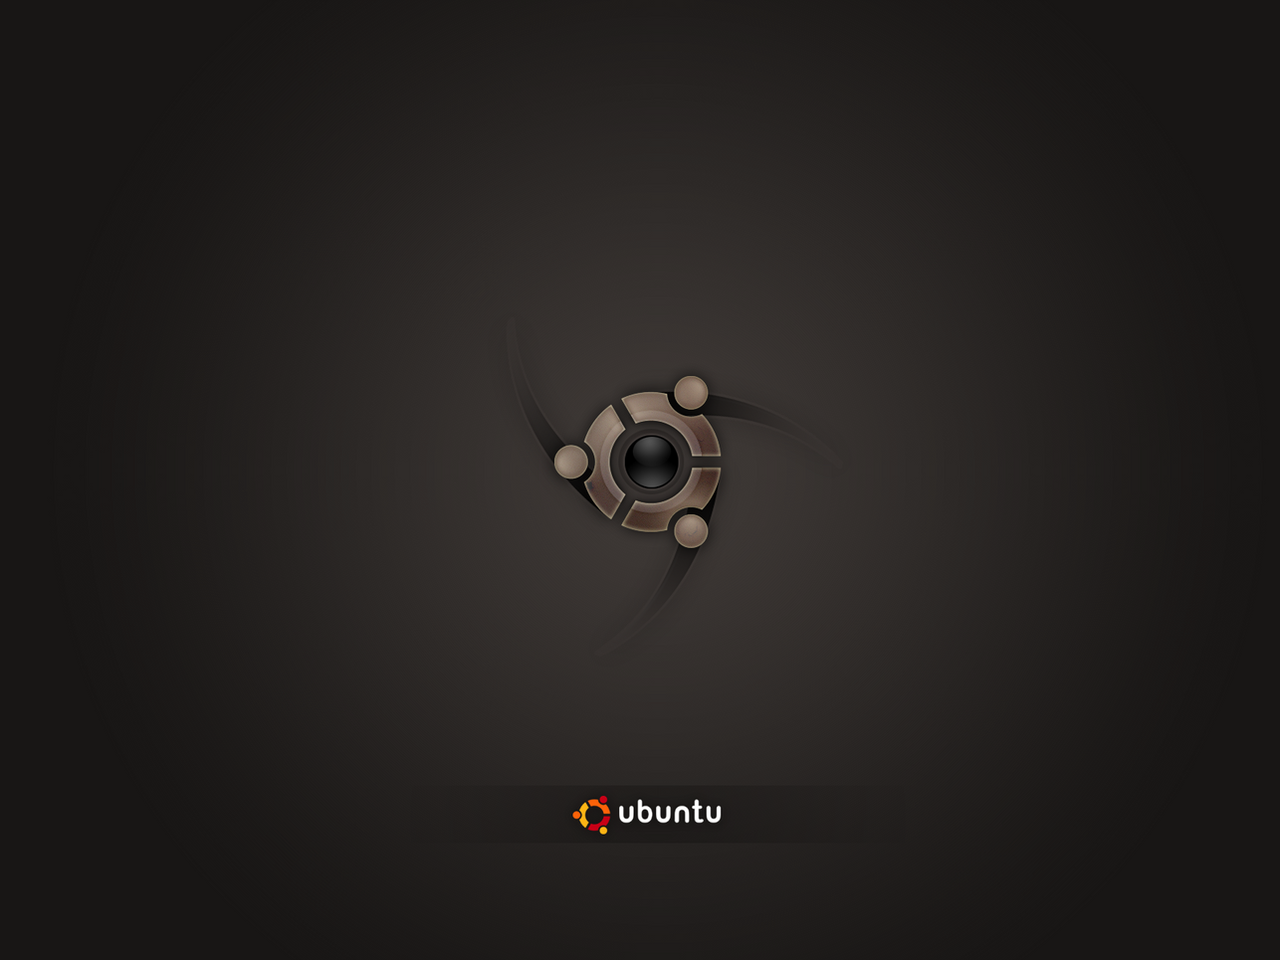 Ubuntu Metal by ~fibermarupok on deviantART